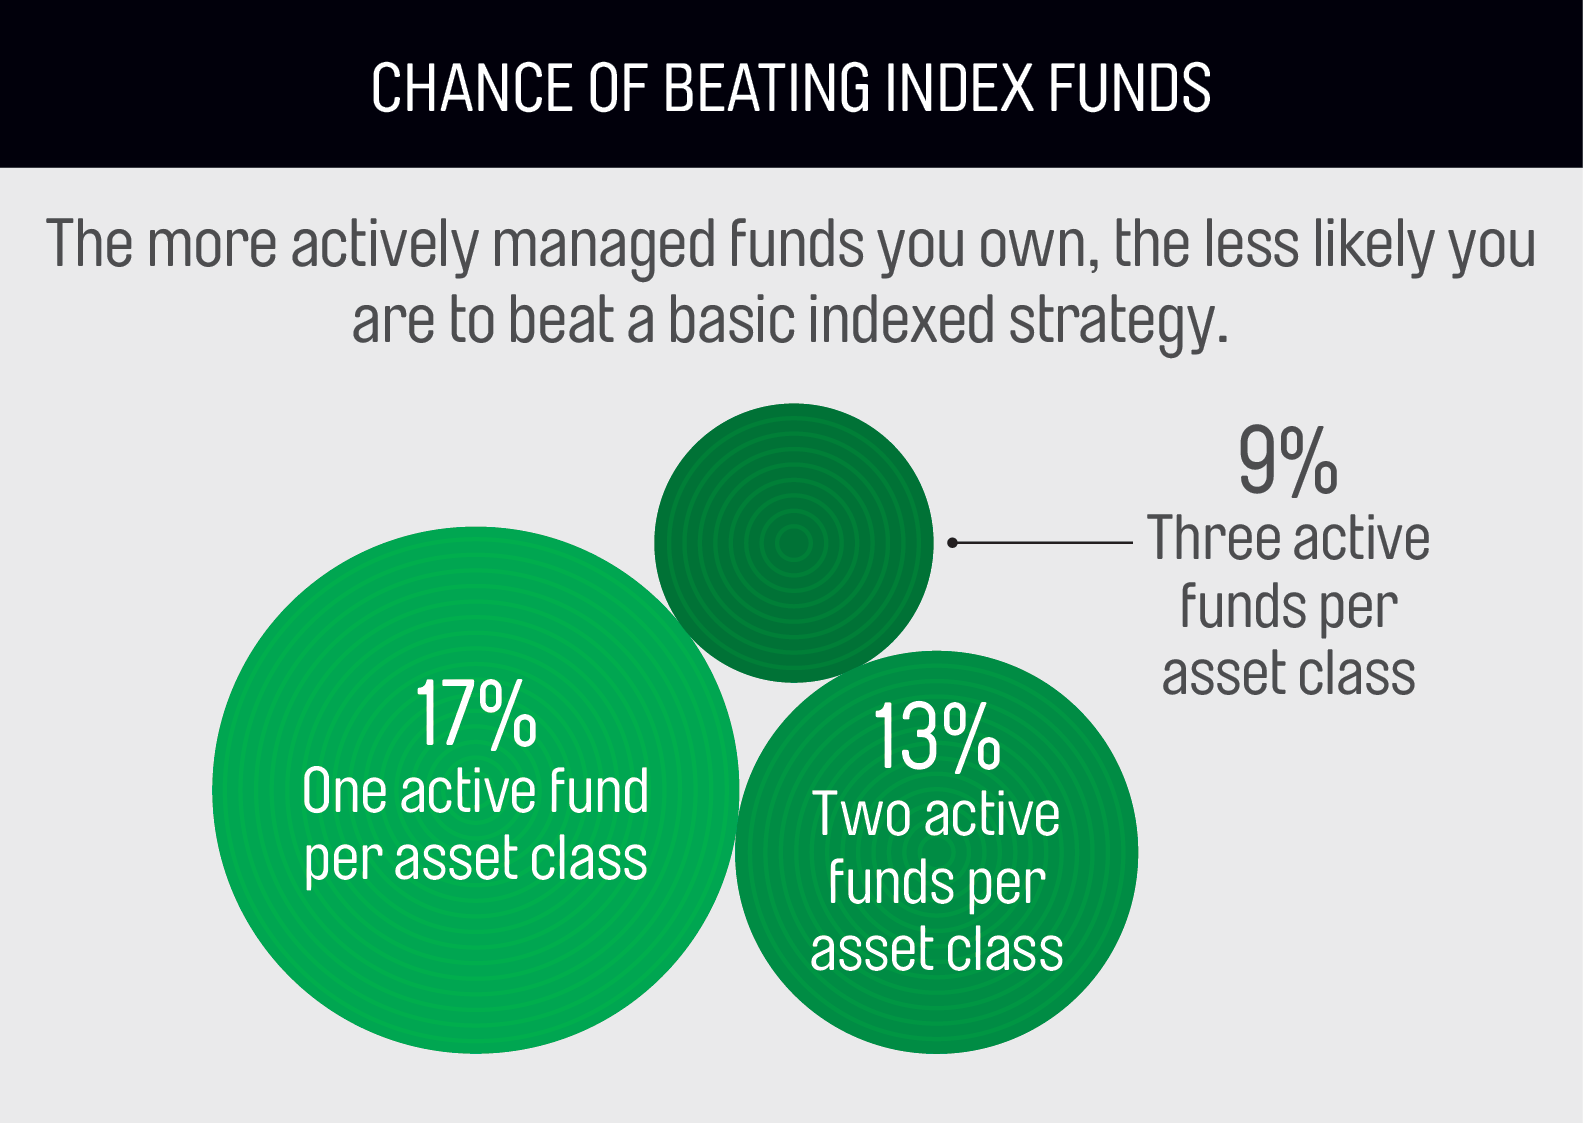 Graphic source: Richard Ferri and Alex Benke, A Case for Index Fund Portfolios